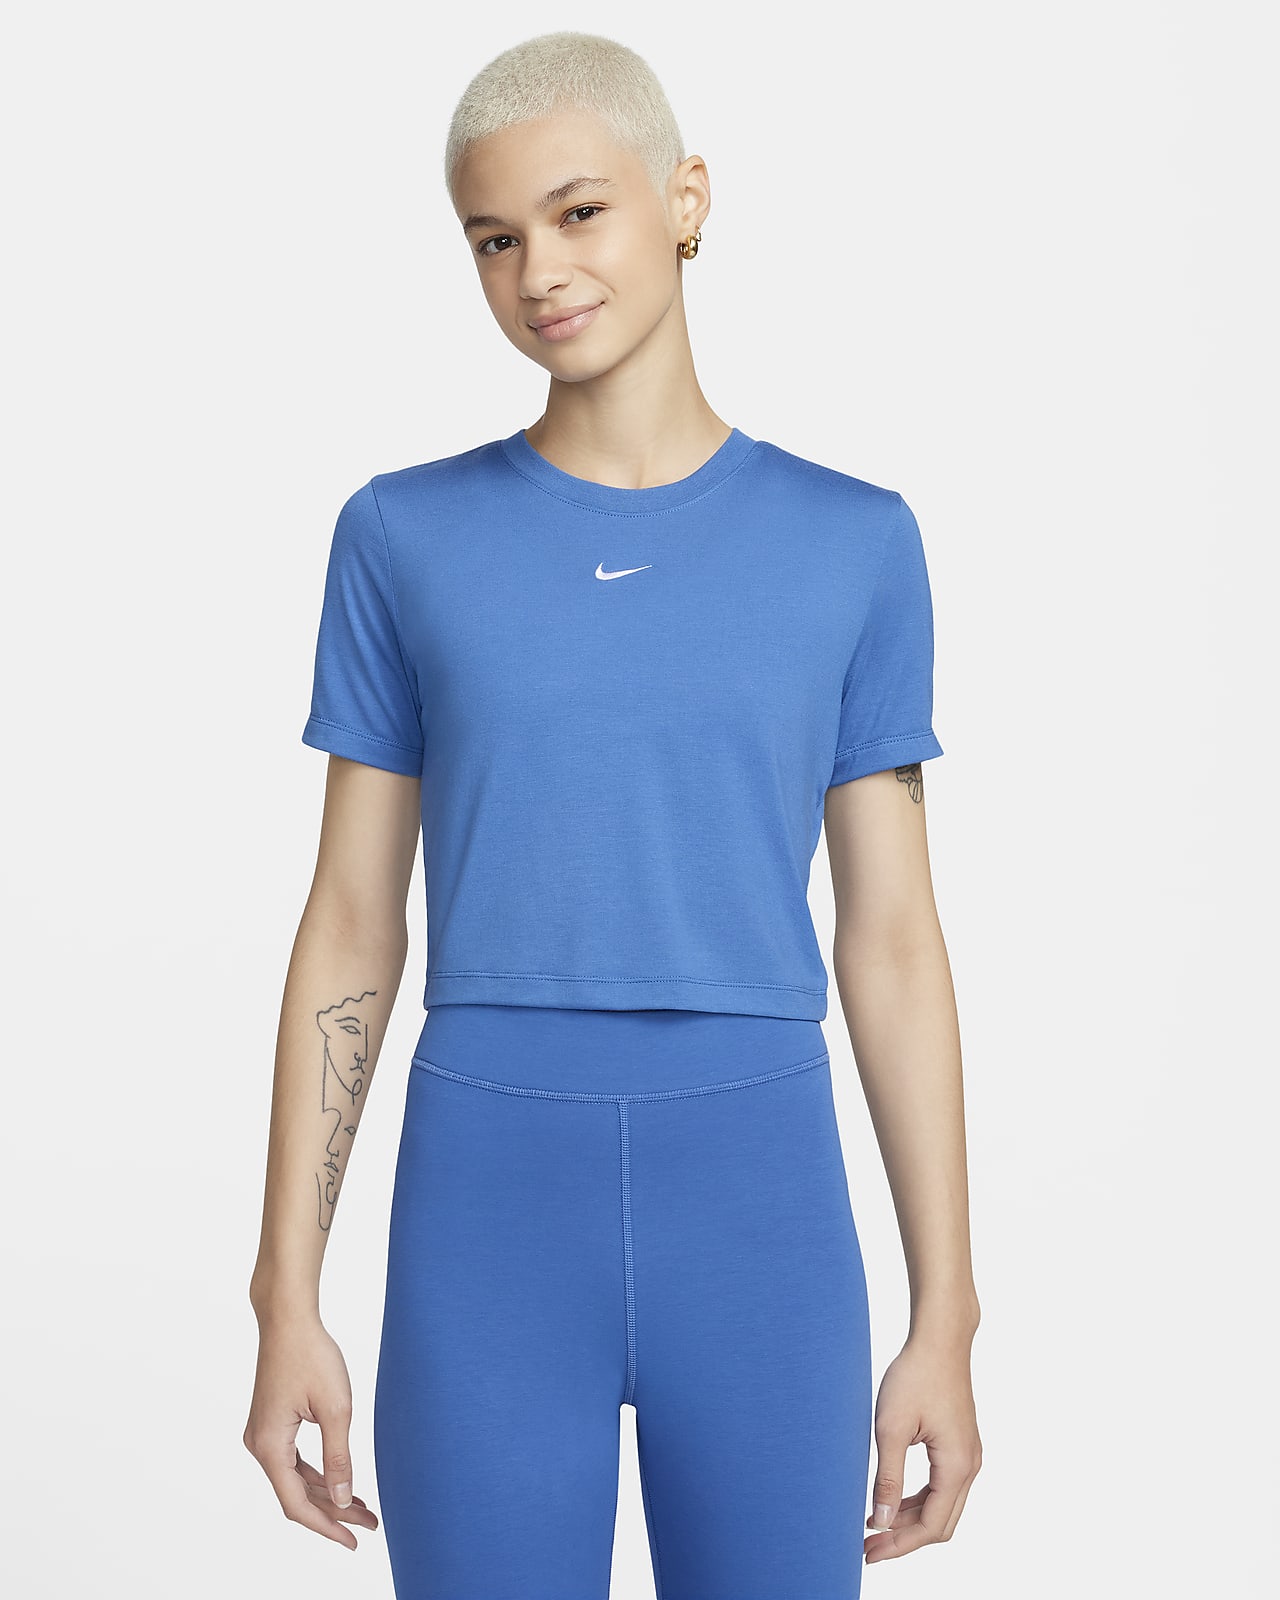 Women\'s Slim Cropped Sportswear Nike T-Shirt. Essential